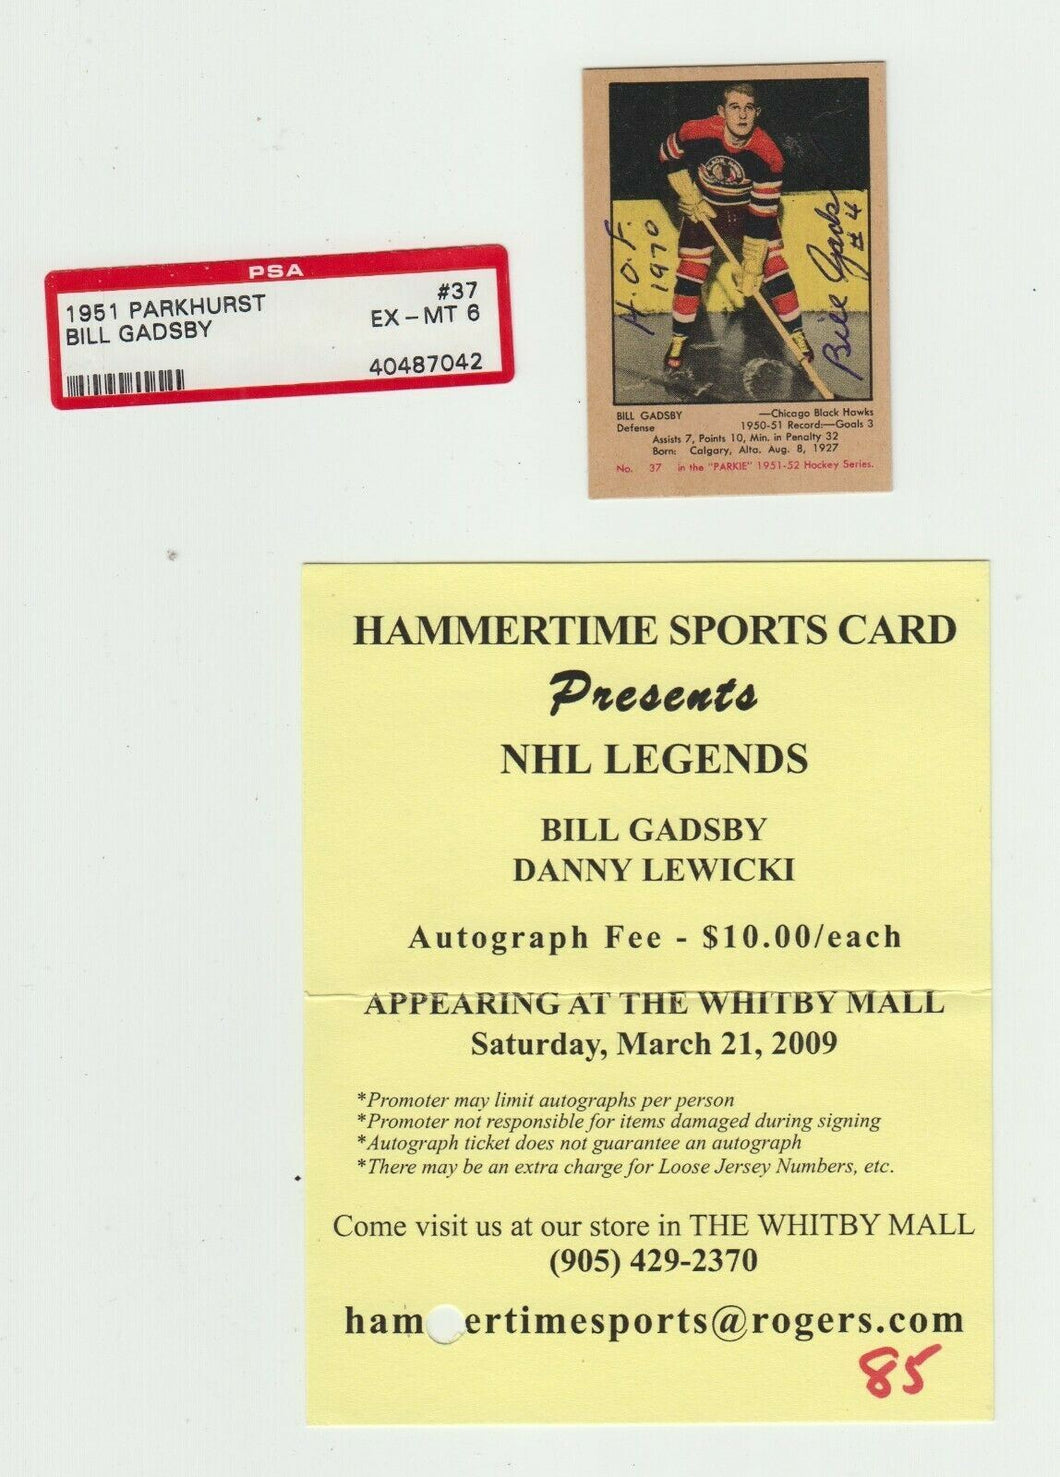 1951 Parkhurst Bill Gadsby #37 Signed Hockey Card w/ PSA EX-MT 6 Certificate